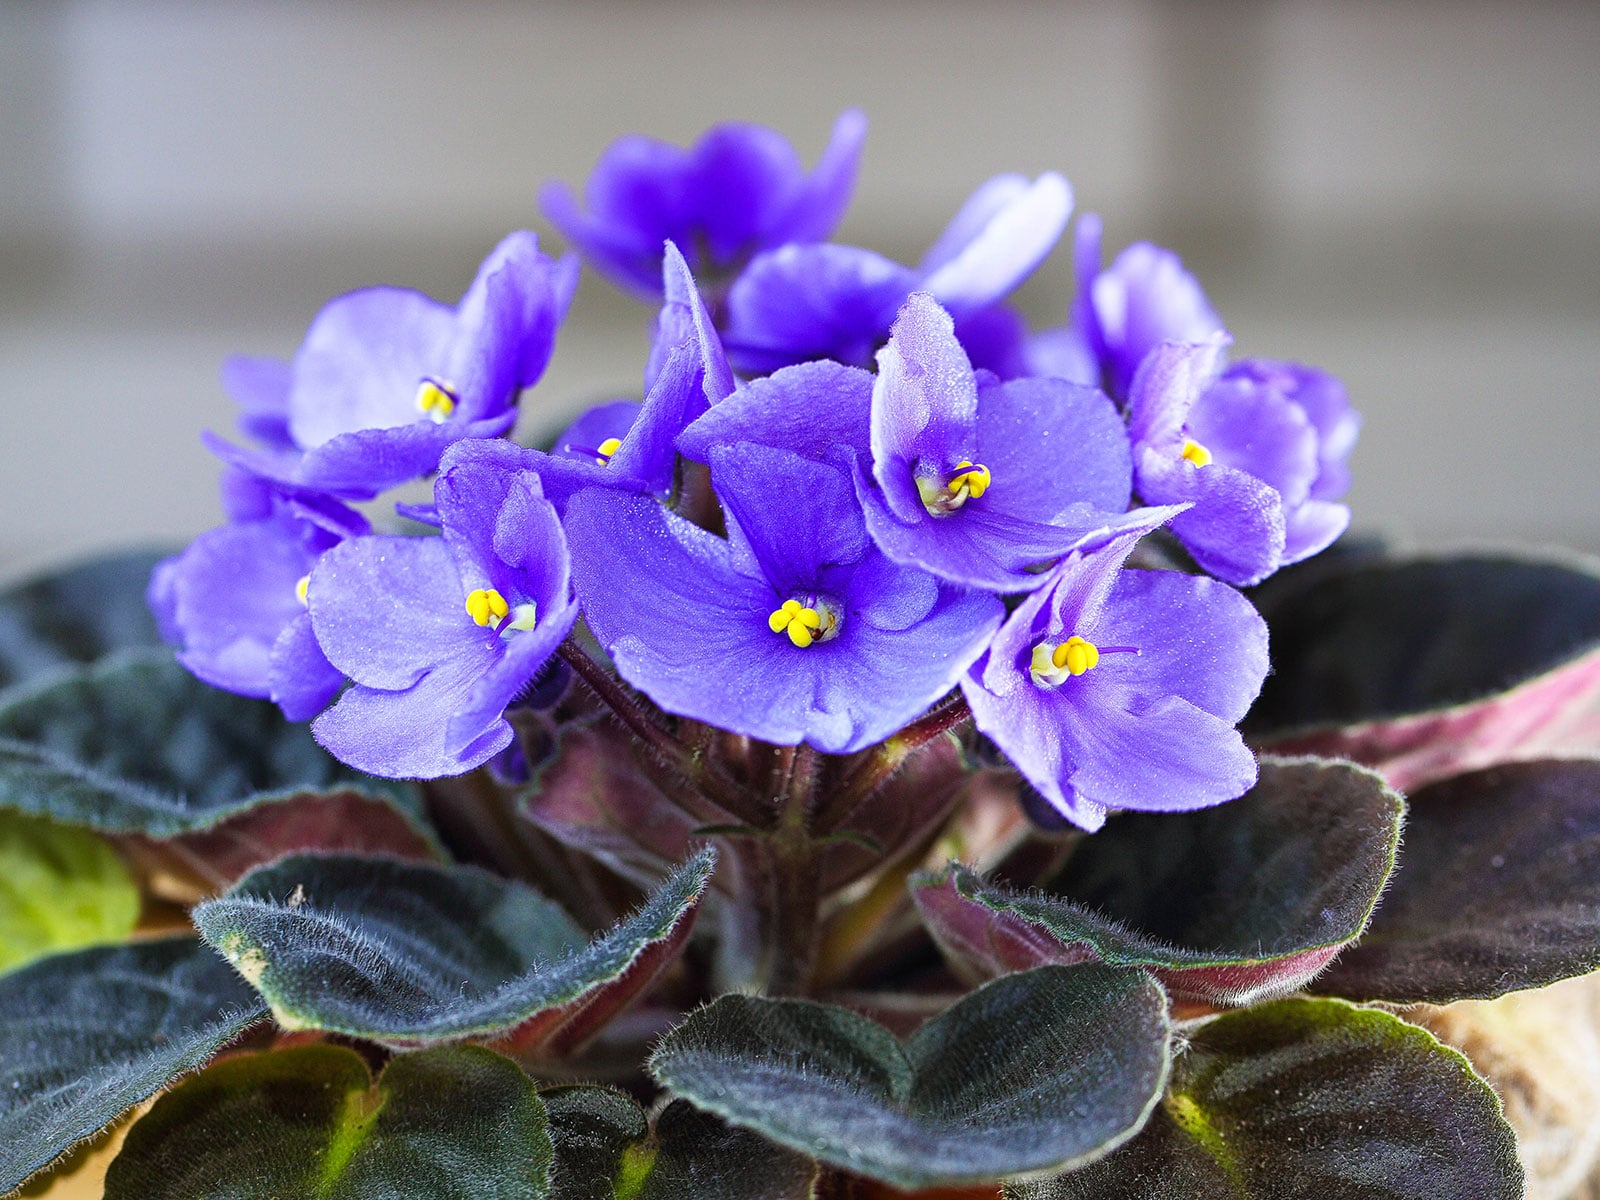 Saintpaulia plant in bloom with bluish-purple flowers